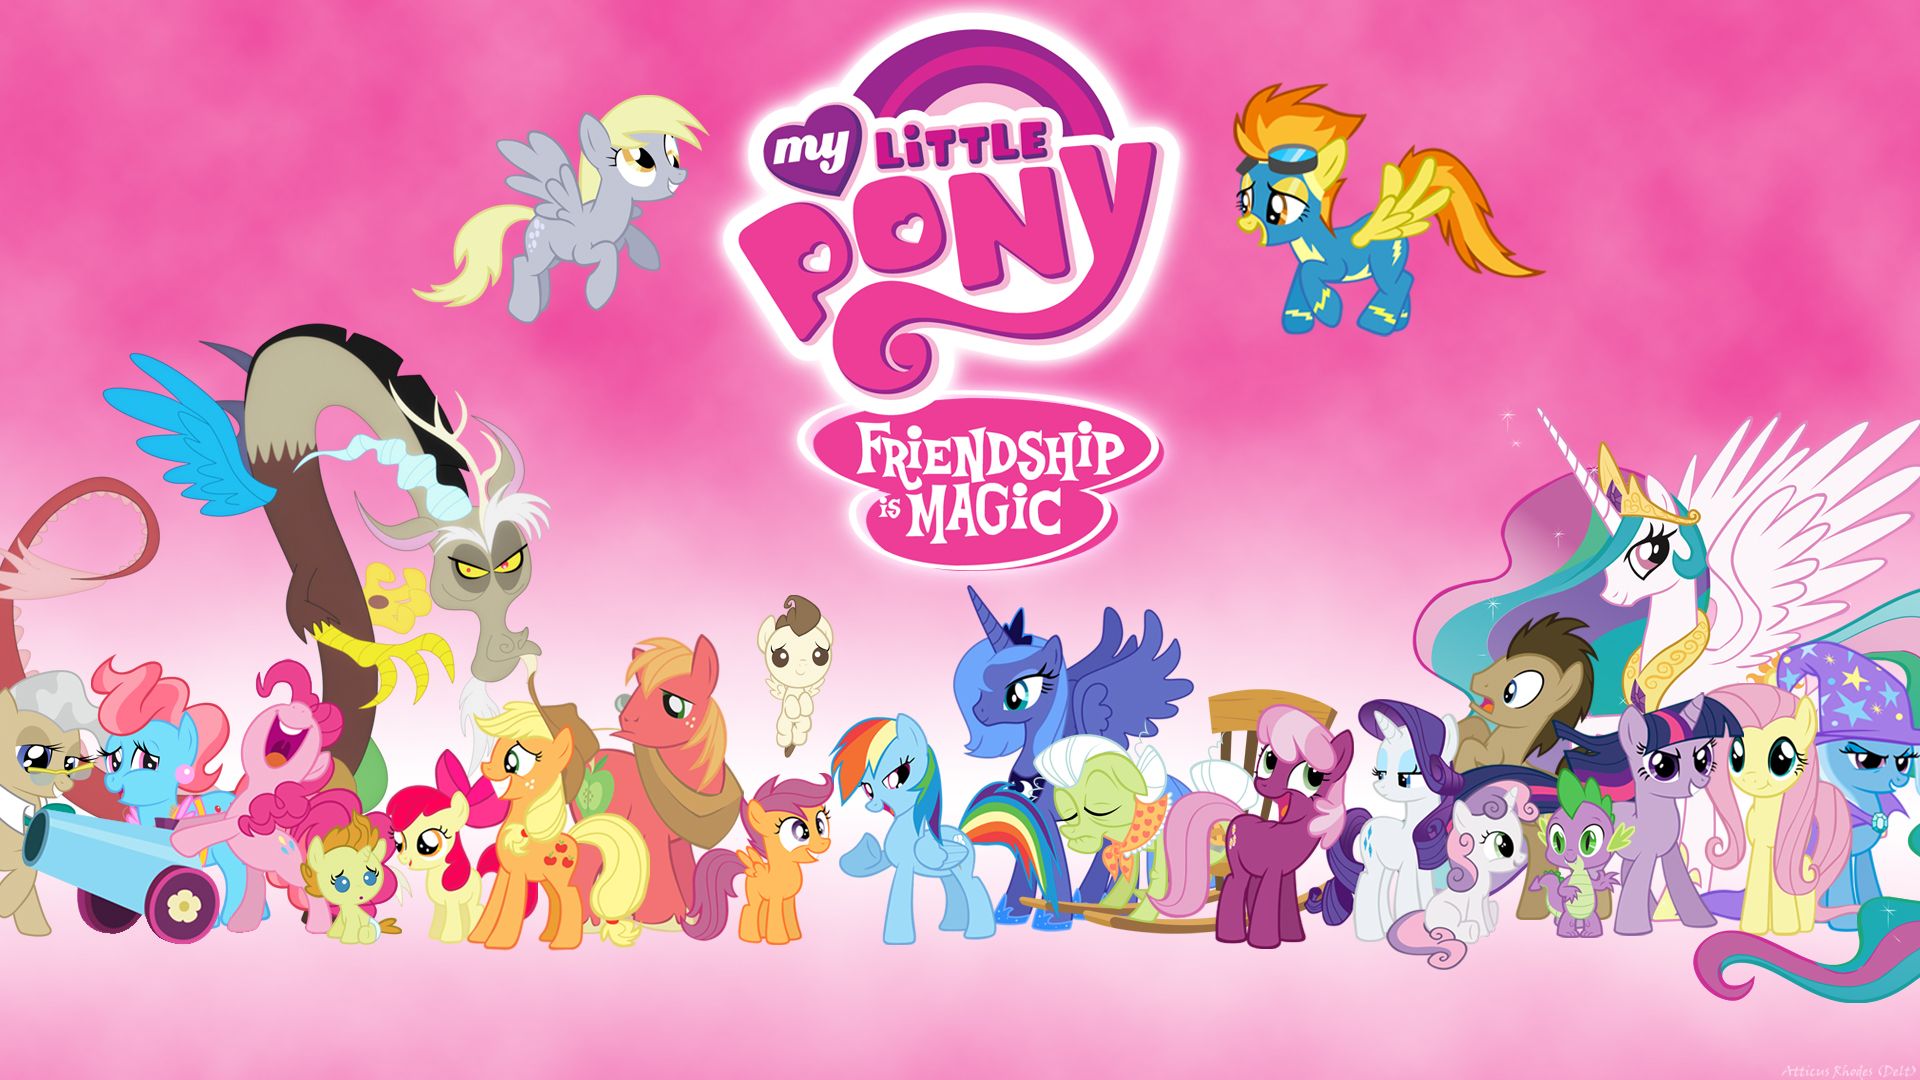 My-little-pony-friendship-is-magic-mlpfim-wallpaper.jpg